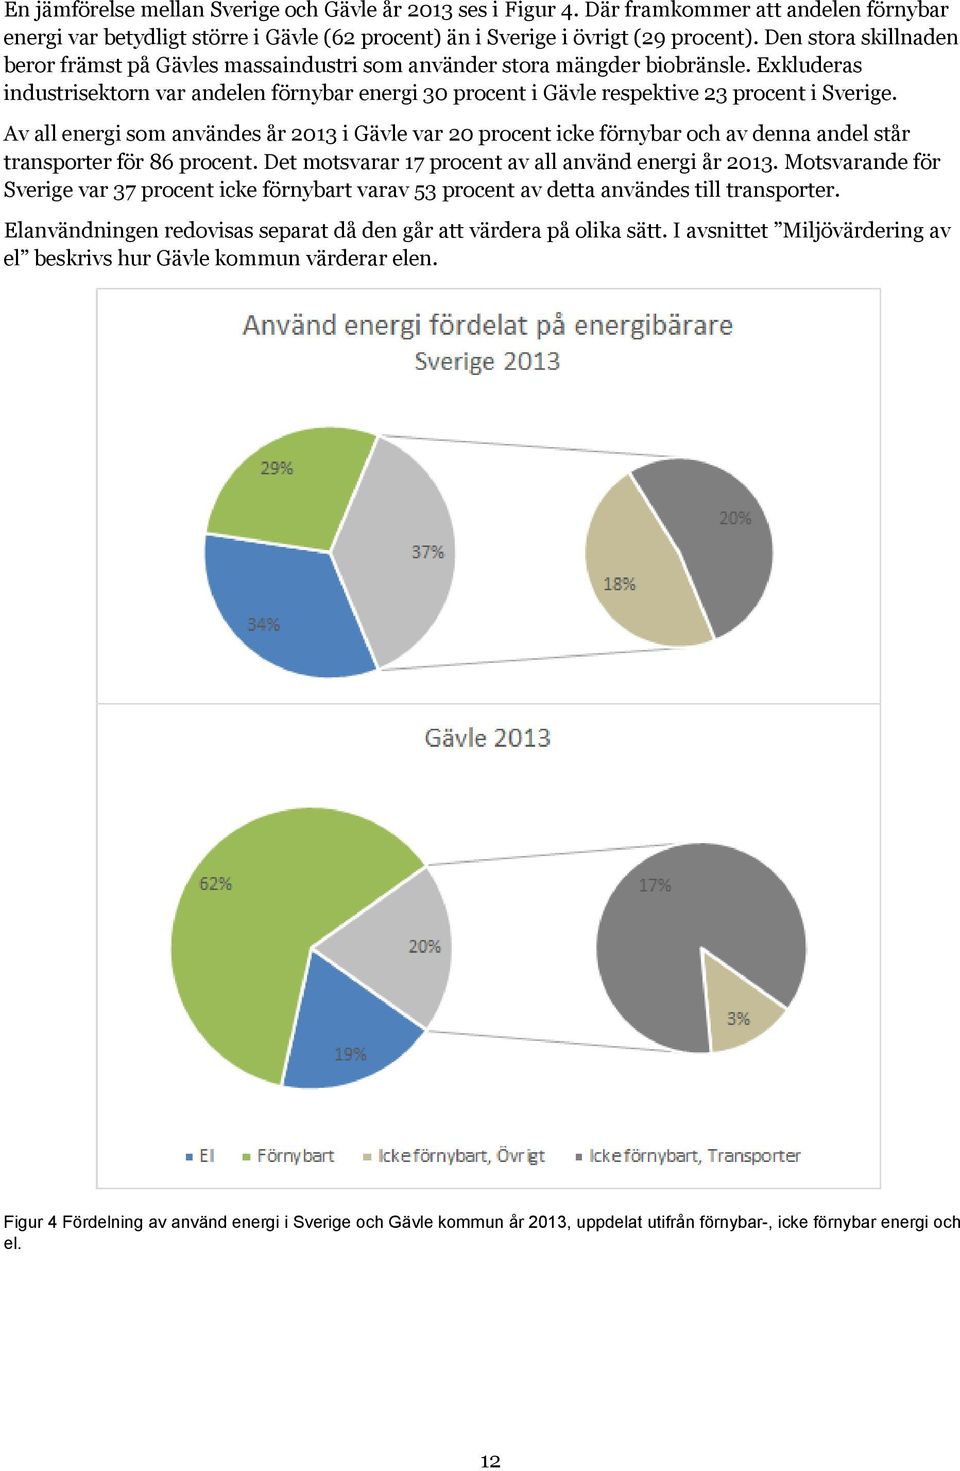 Exkluderas industrisektorn var andelen förnybar energi 30 procent i Gävle respektive 23 procent i Sverige.